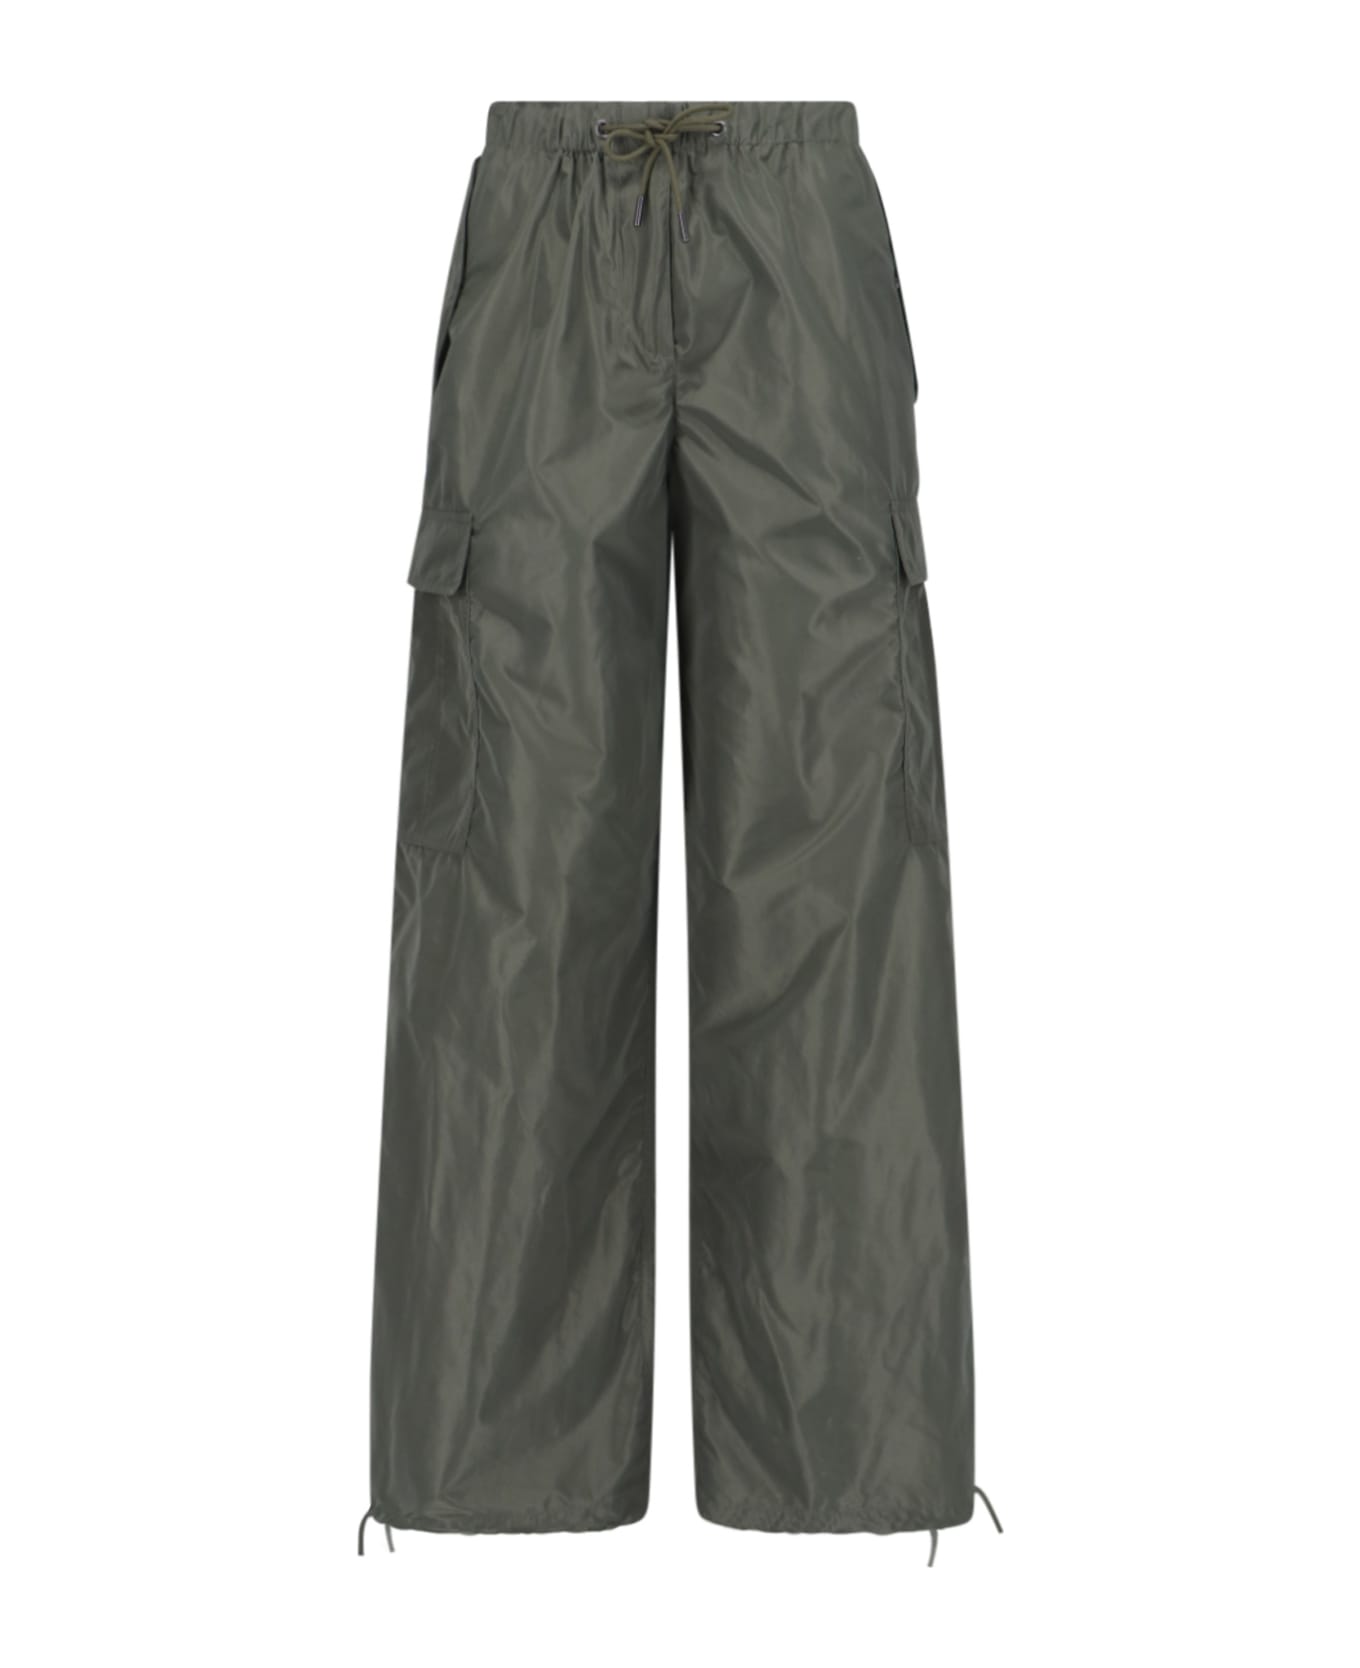 Aspesi Cargo Pants - Green